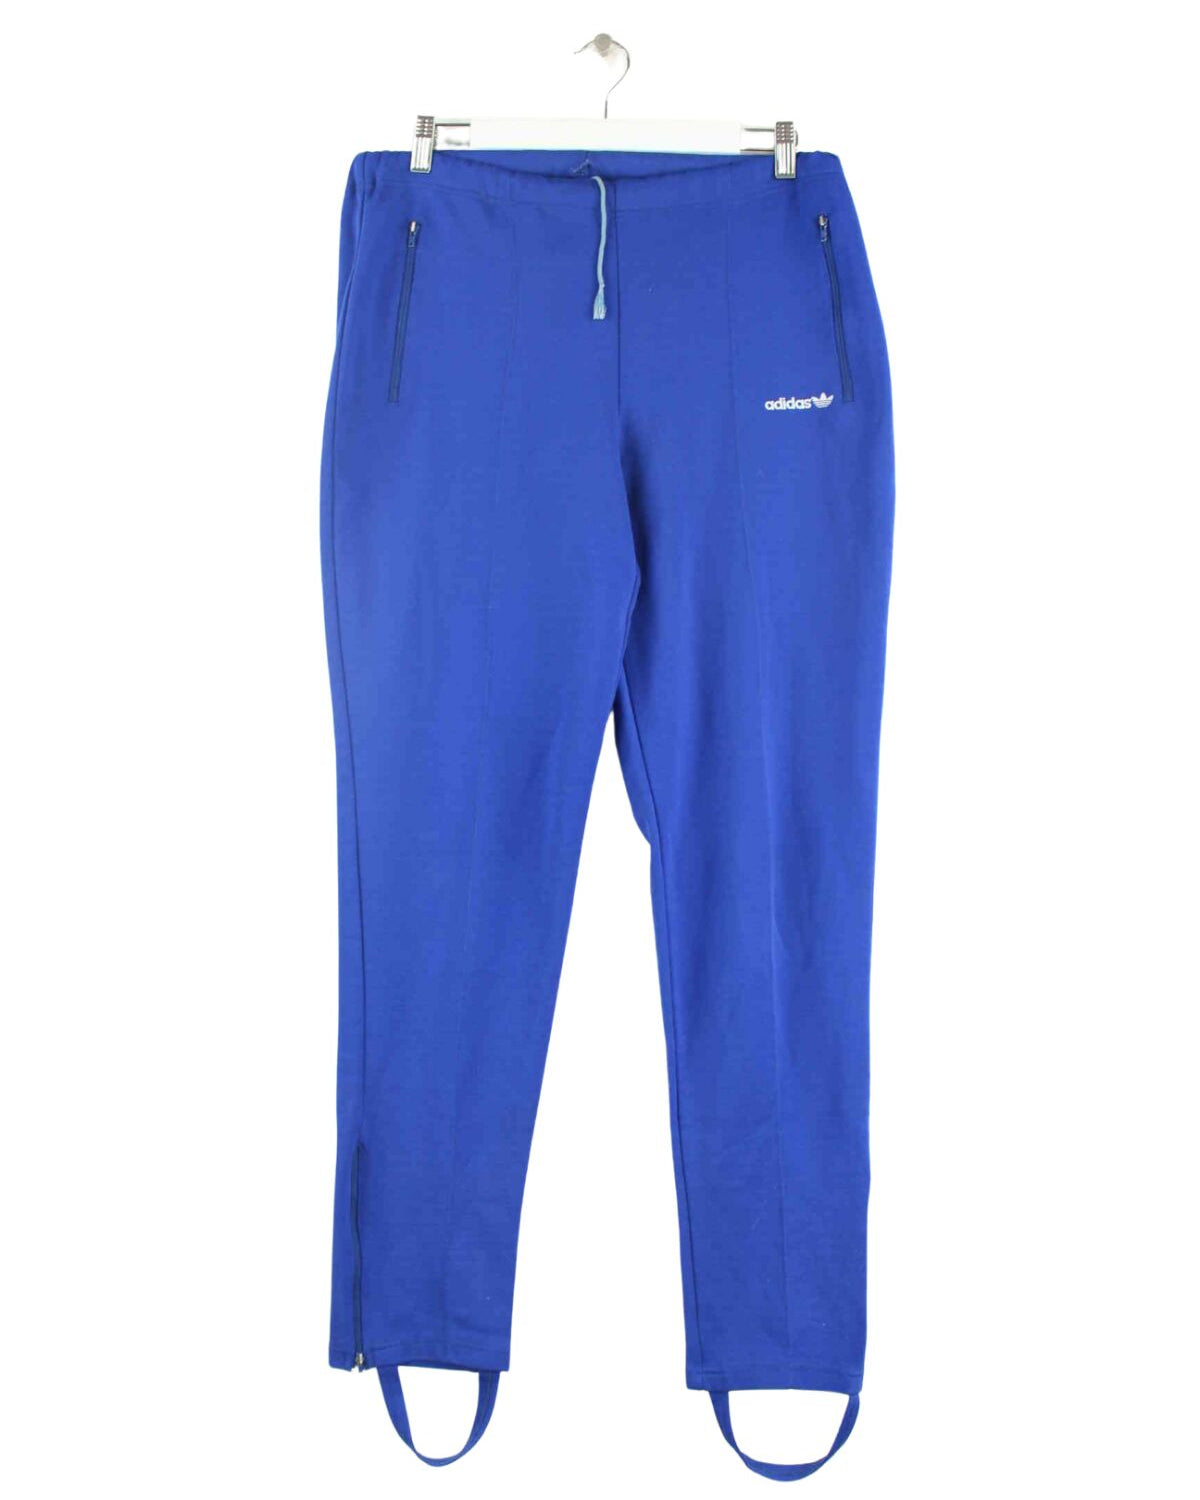 Adidas 90s Vintage Embroidered Track Pants Blau S (front image)